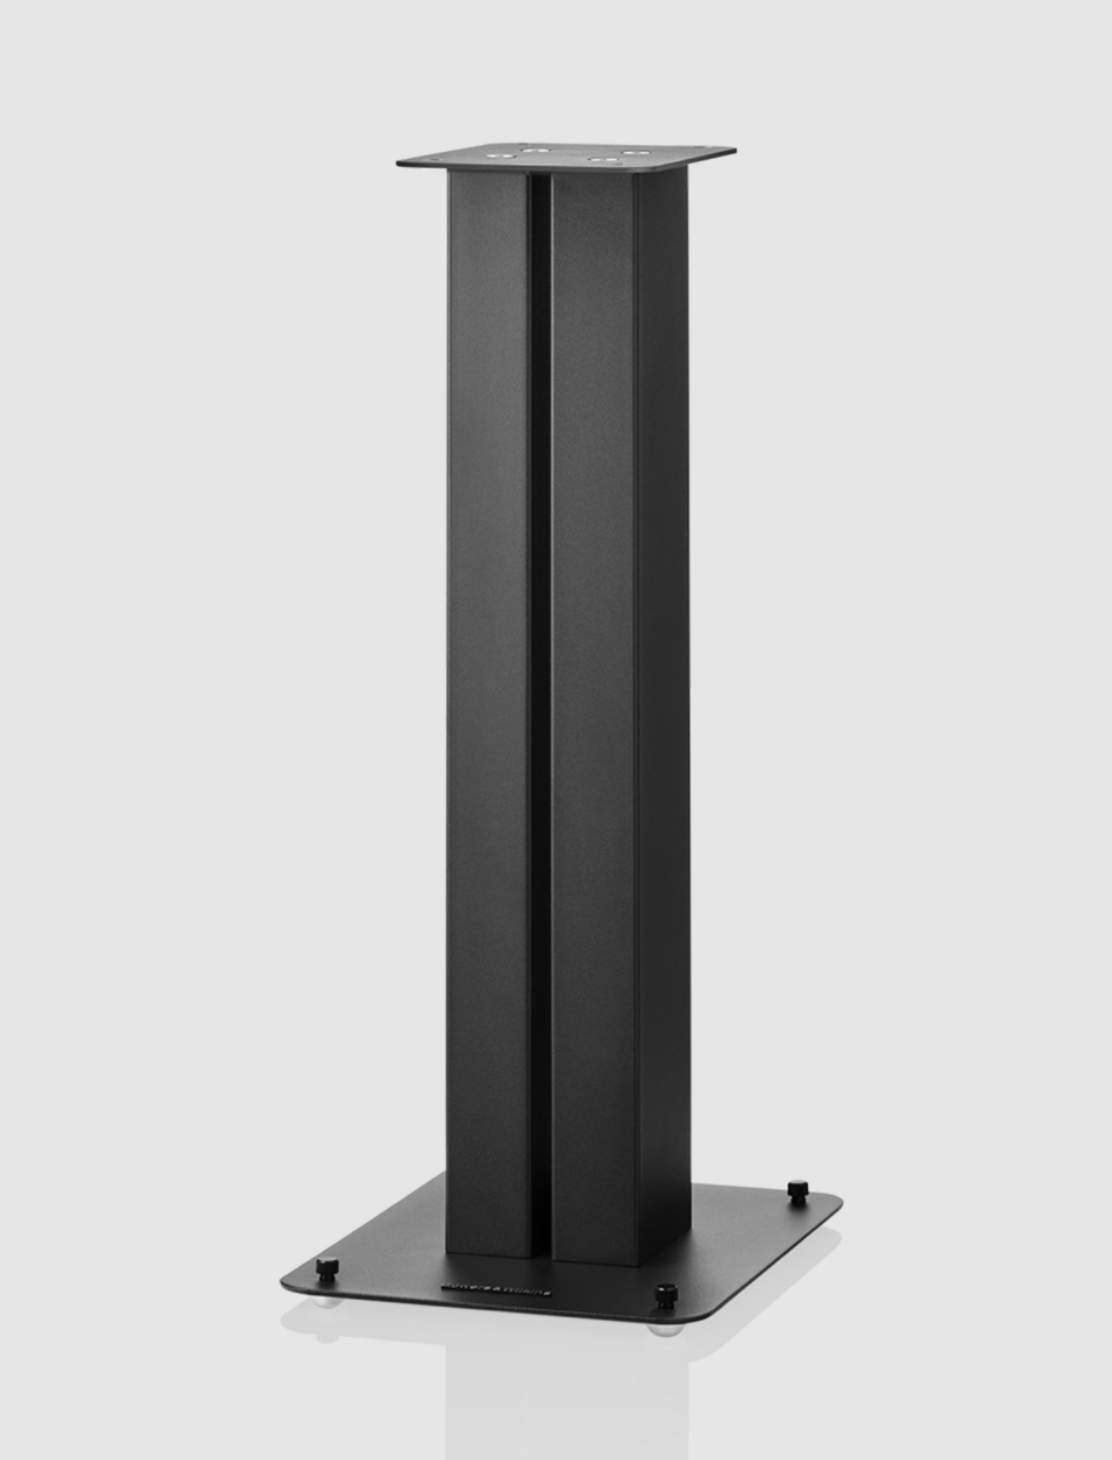 B&W FS600 S3 Speaker Stands in black.  Angled image